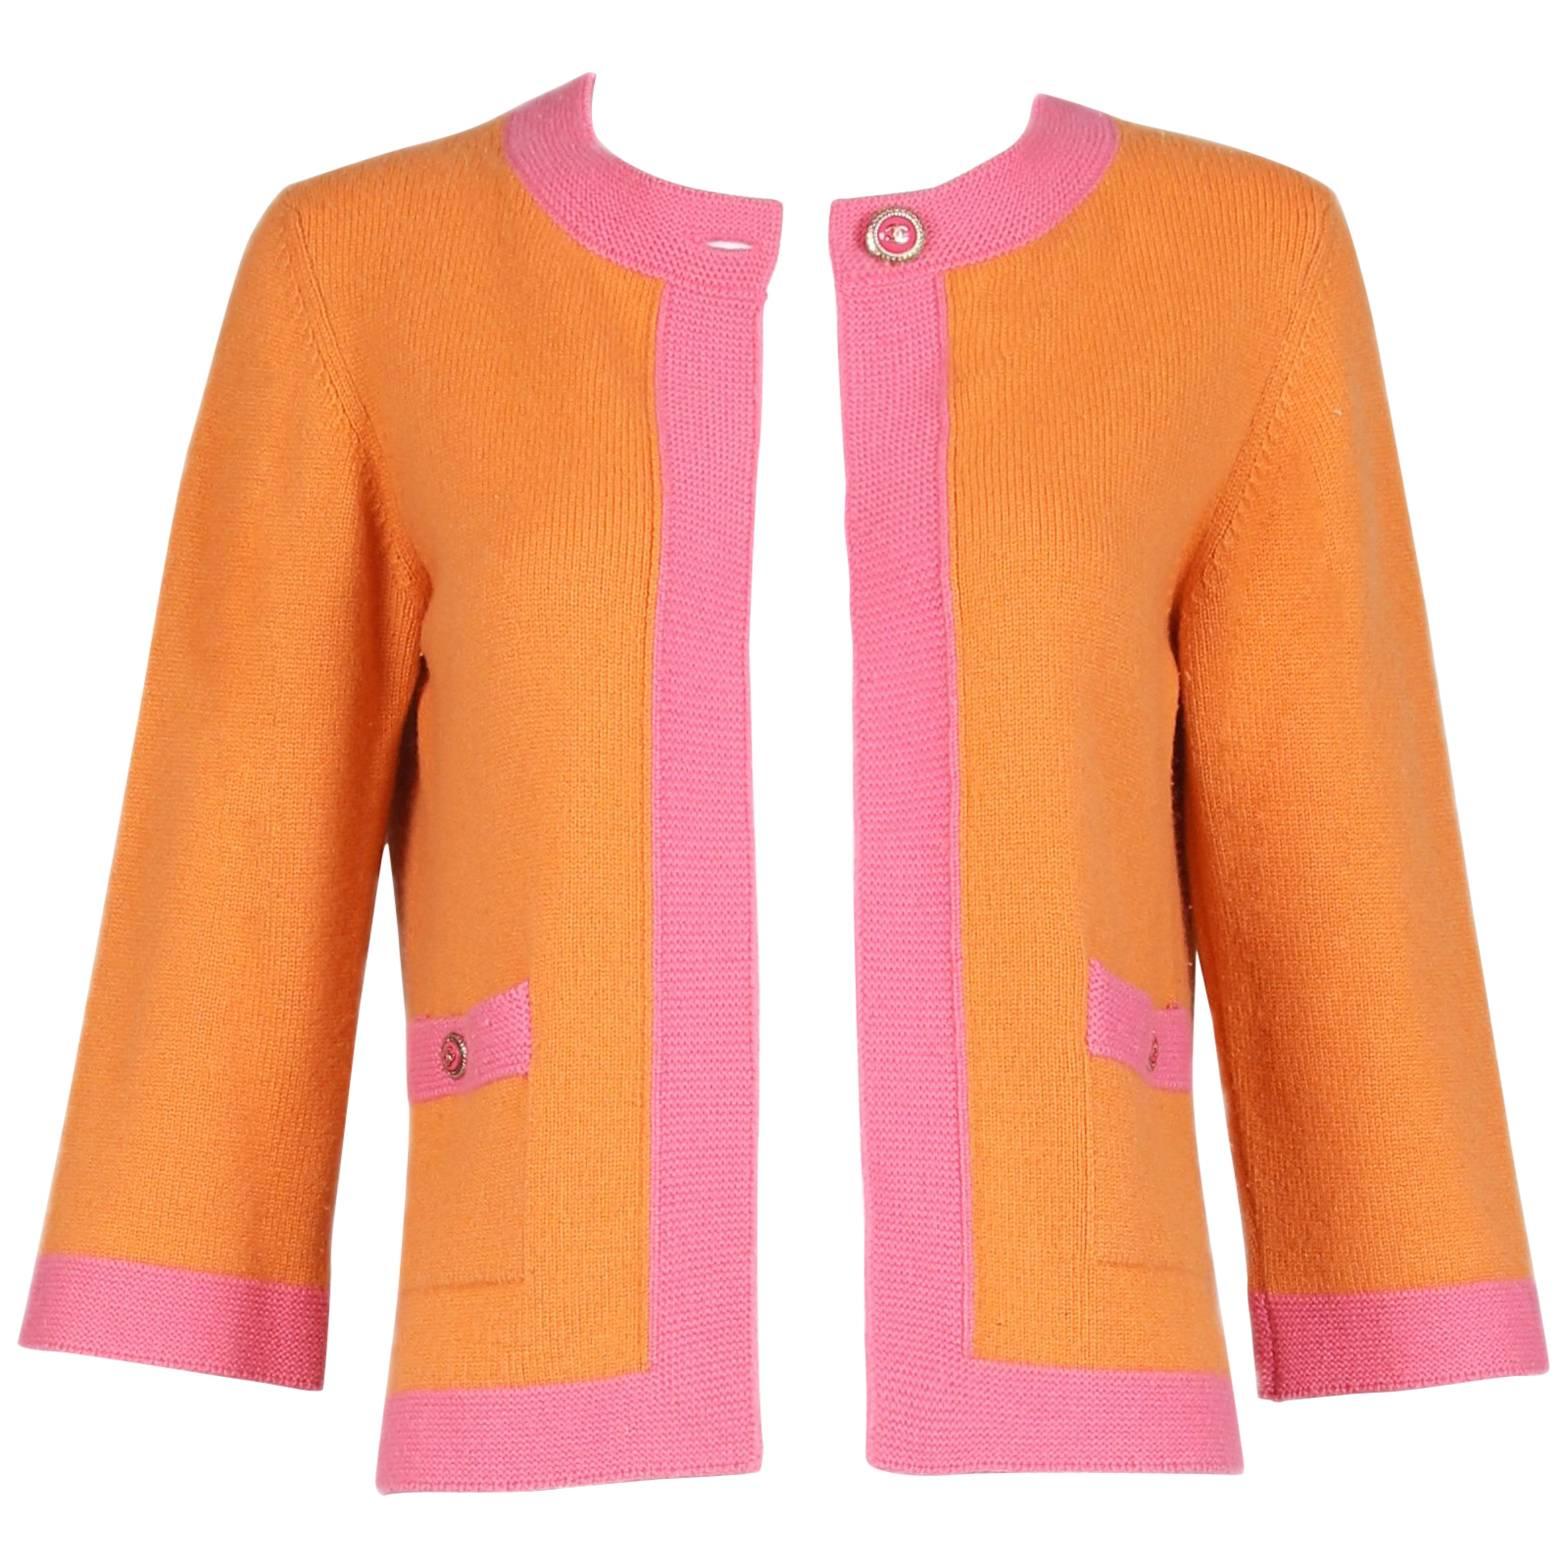 2007 Chanel Orange Cashmere Cardigan W/Chanel CC Logo Buttons & Pink Trim